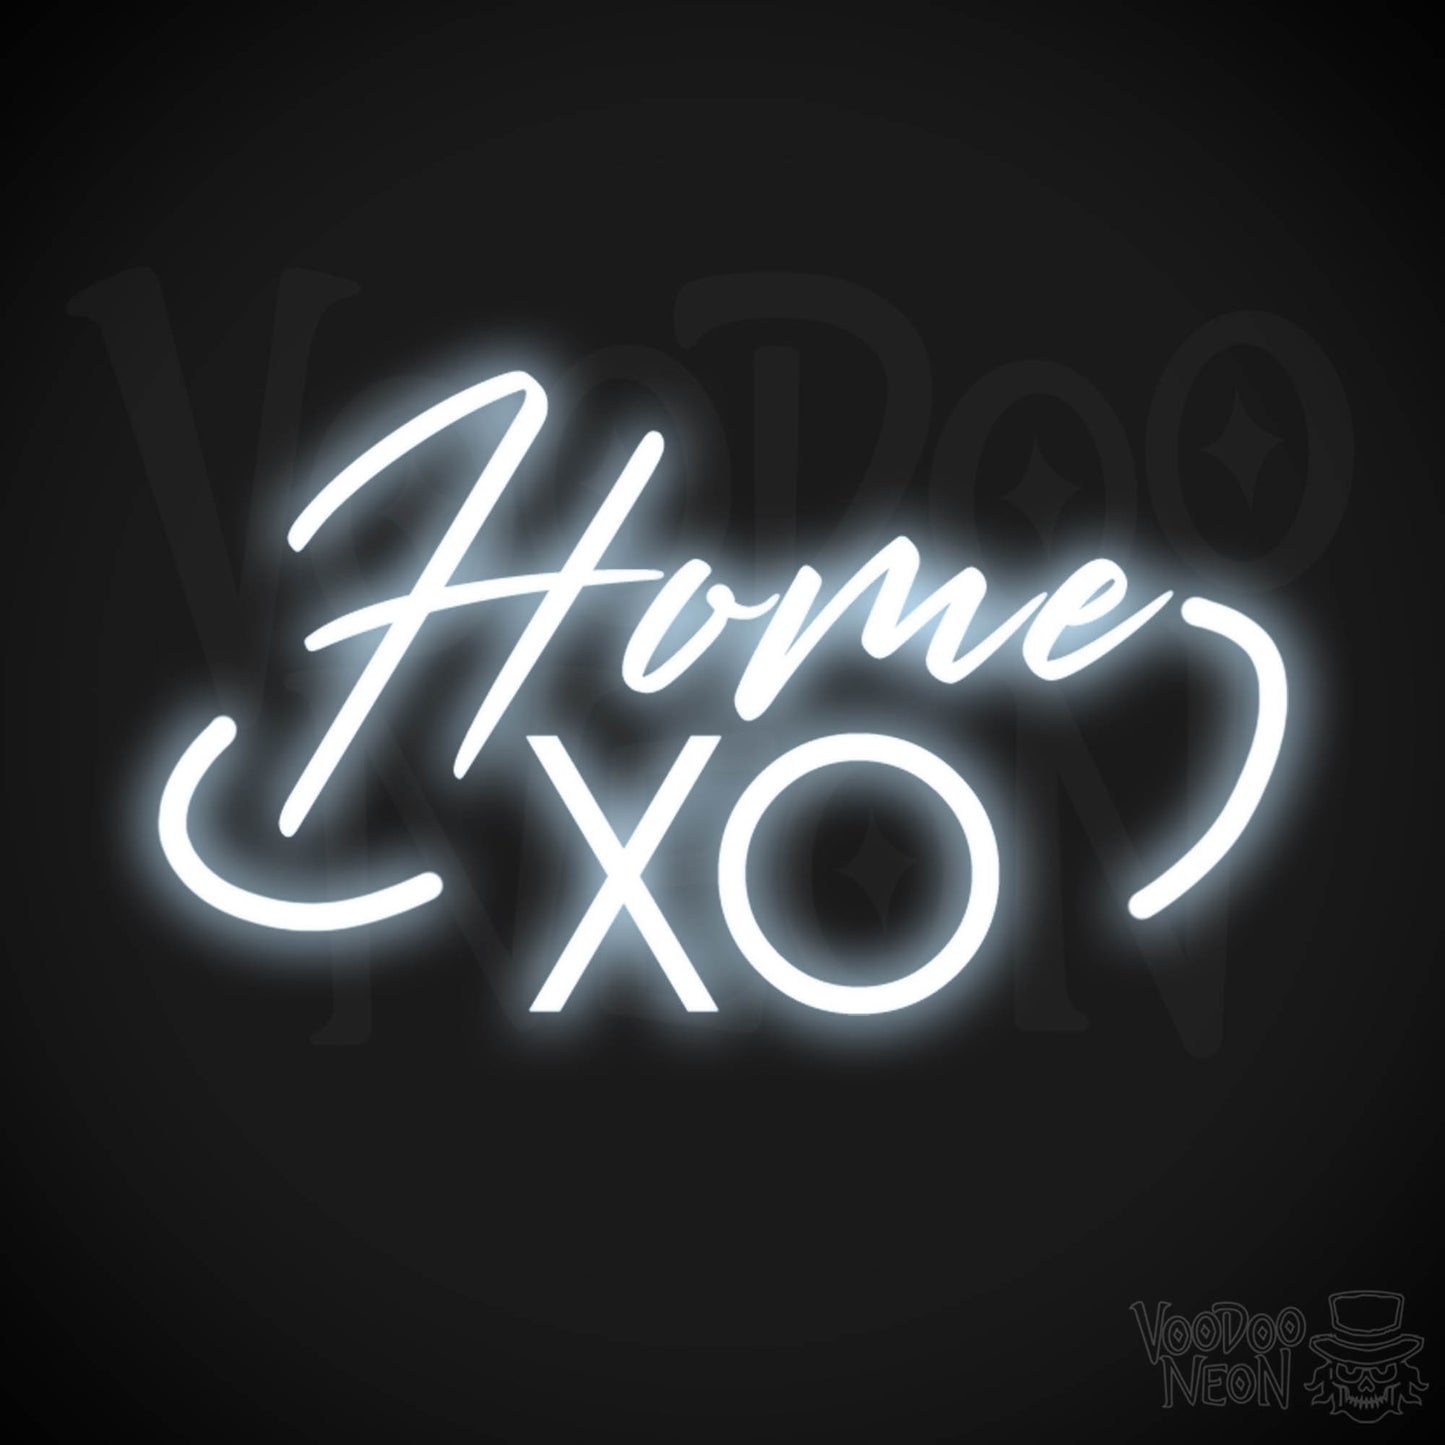 Home XO Neon Sign - Neon Home XO Sign - Wall Art - Color Cool White